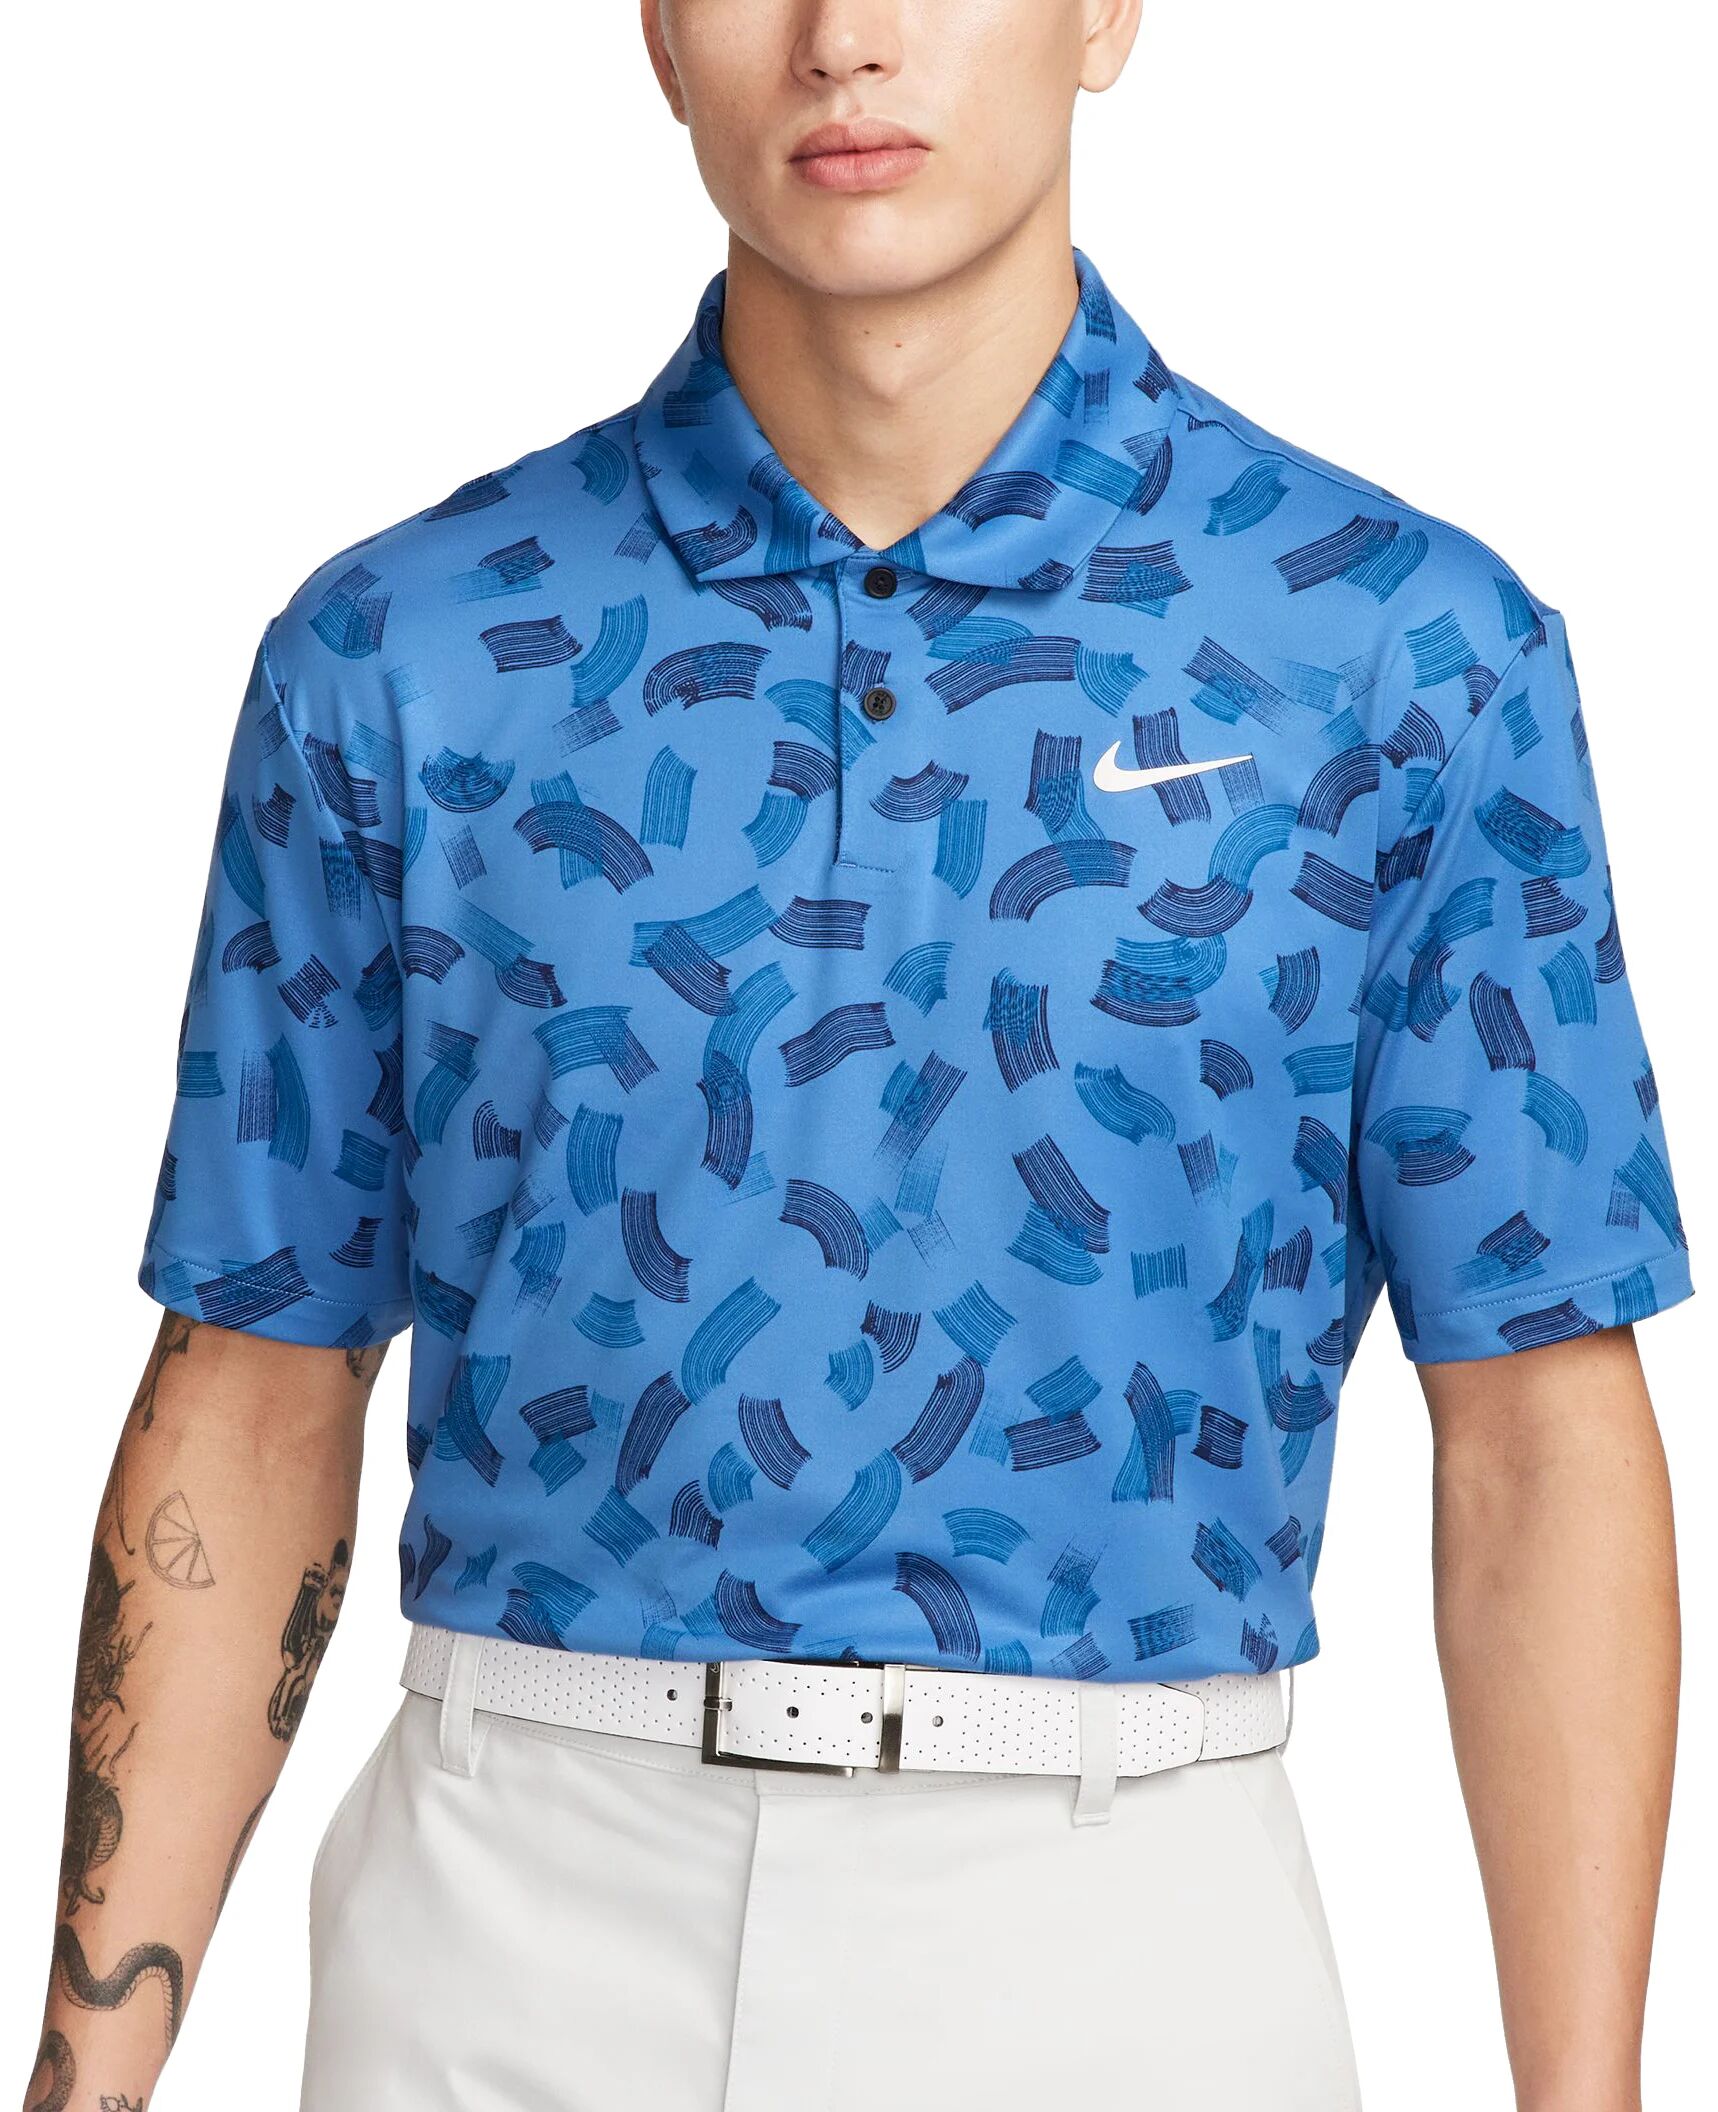 Nike Tour Dri-FIT Men's Golf Polo - Blue, Size: Small